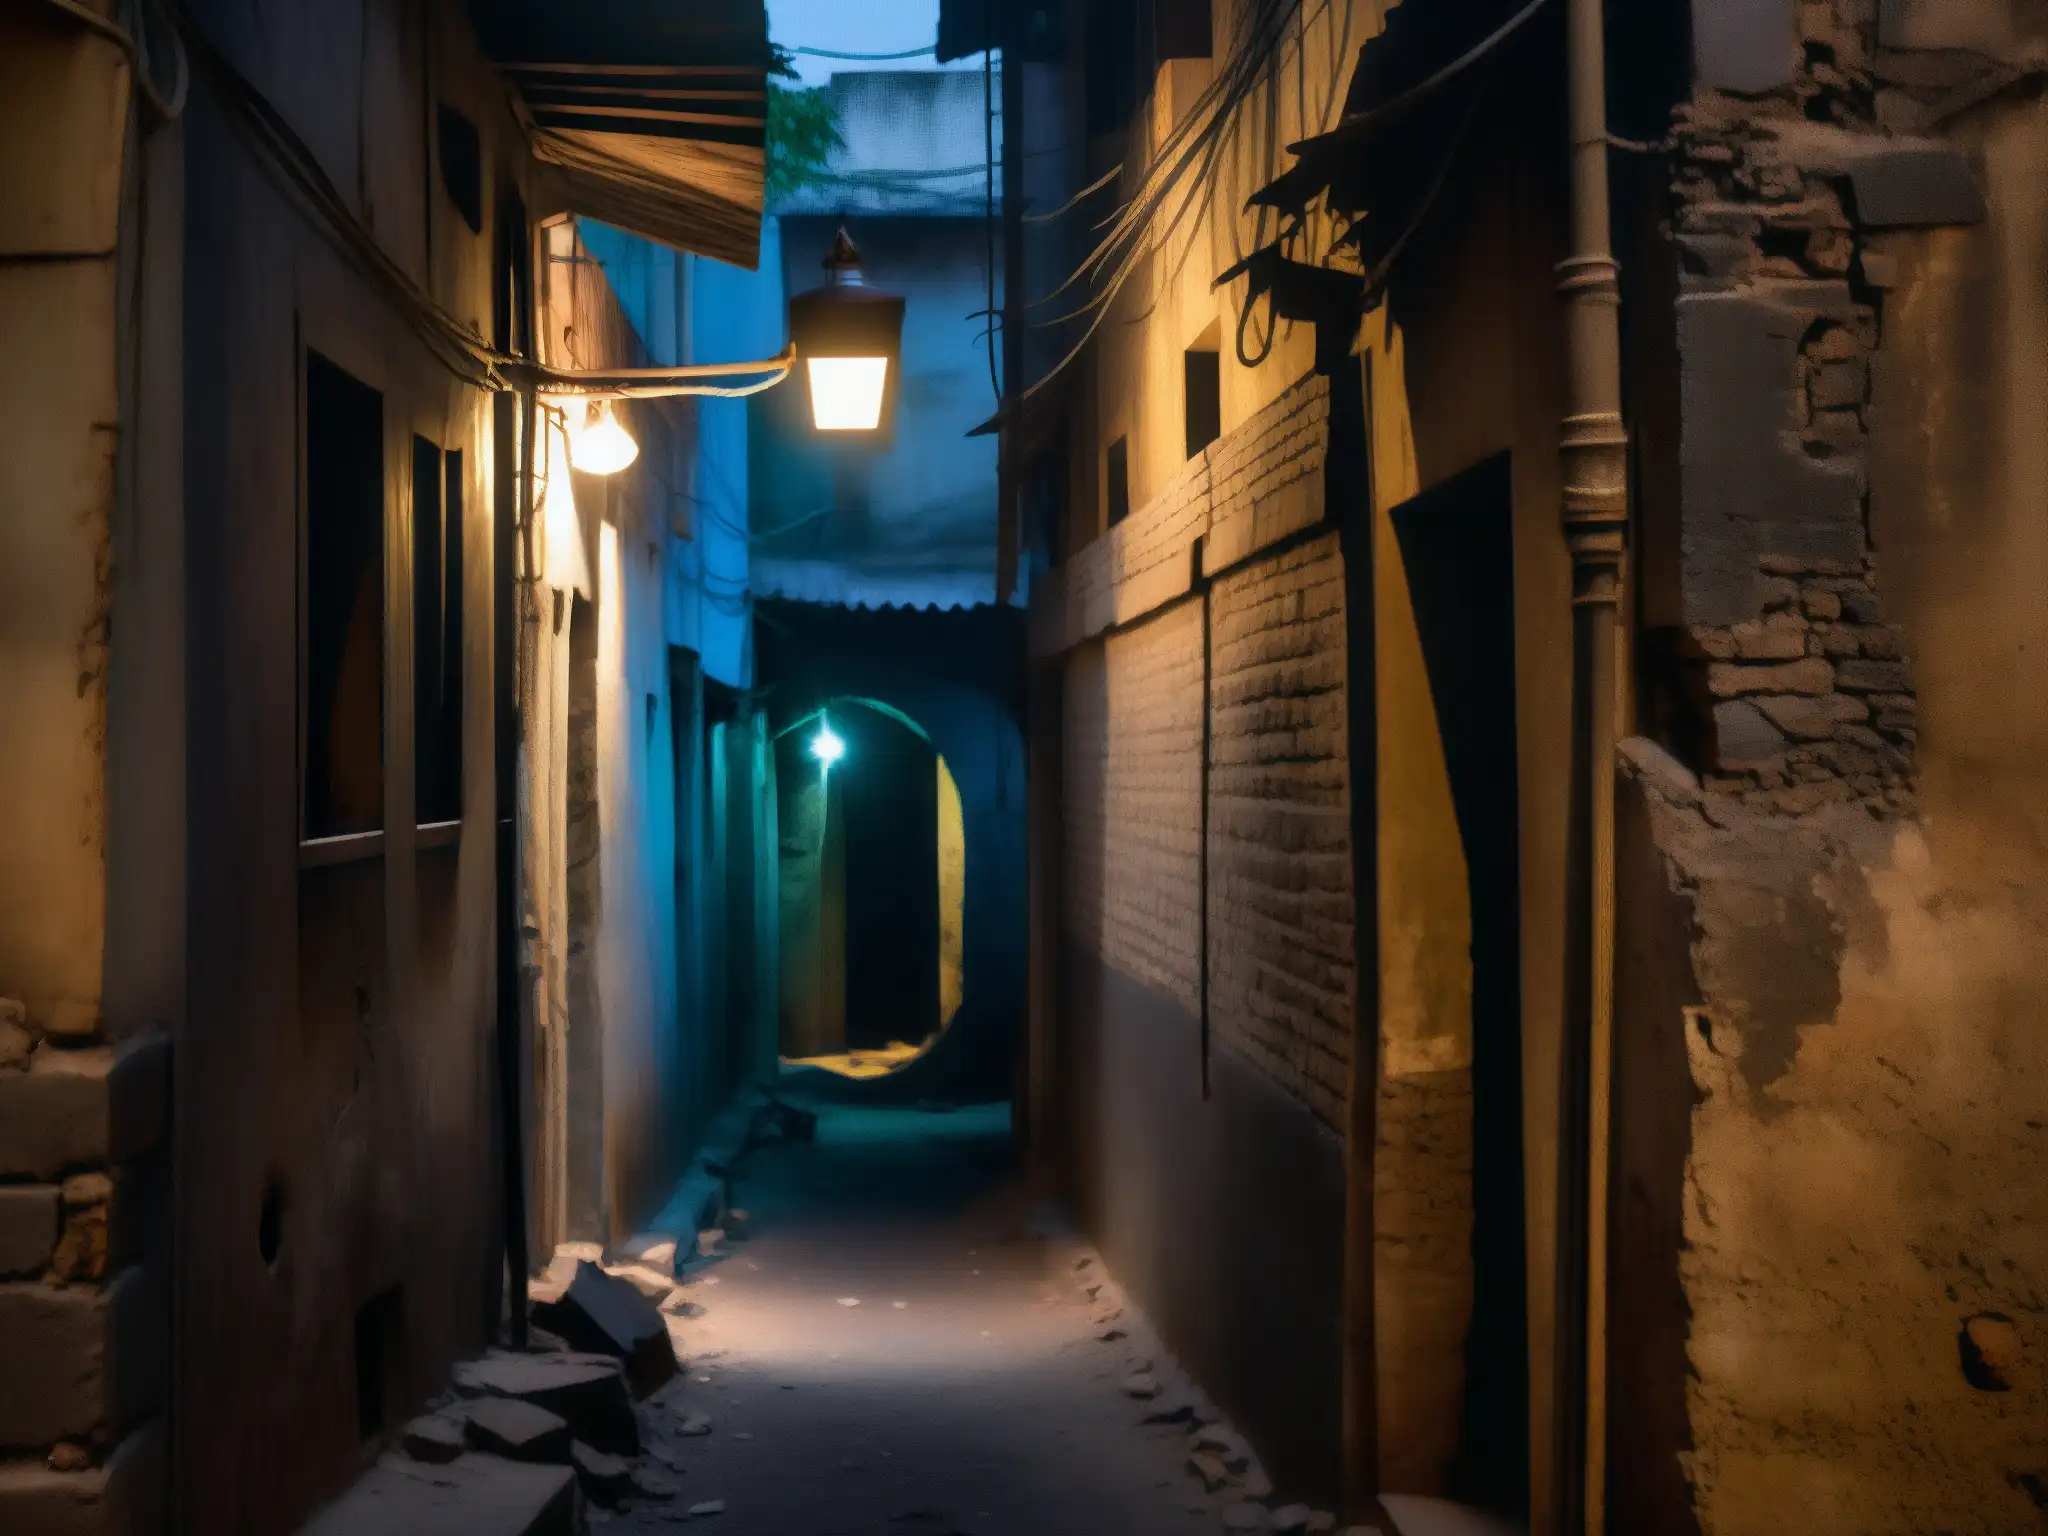 Un callejón oscuro y estrecho en Delhi, India, con luces de calle que proyectan sombras inquietantes